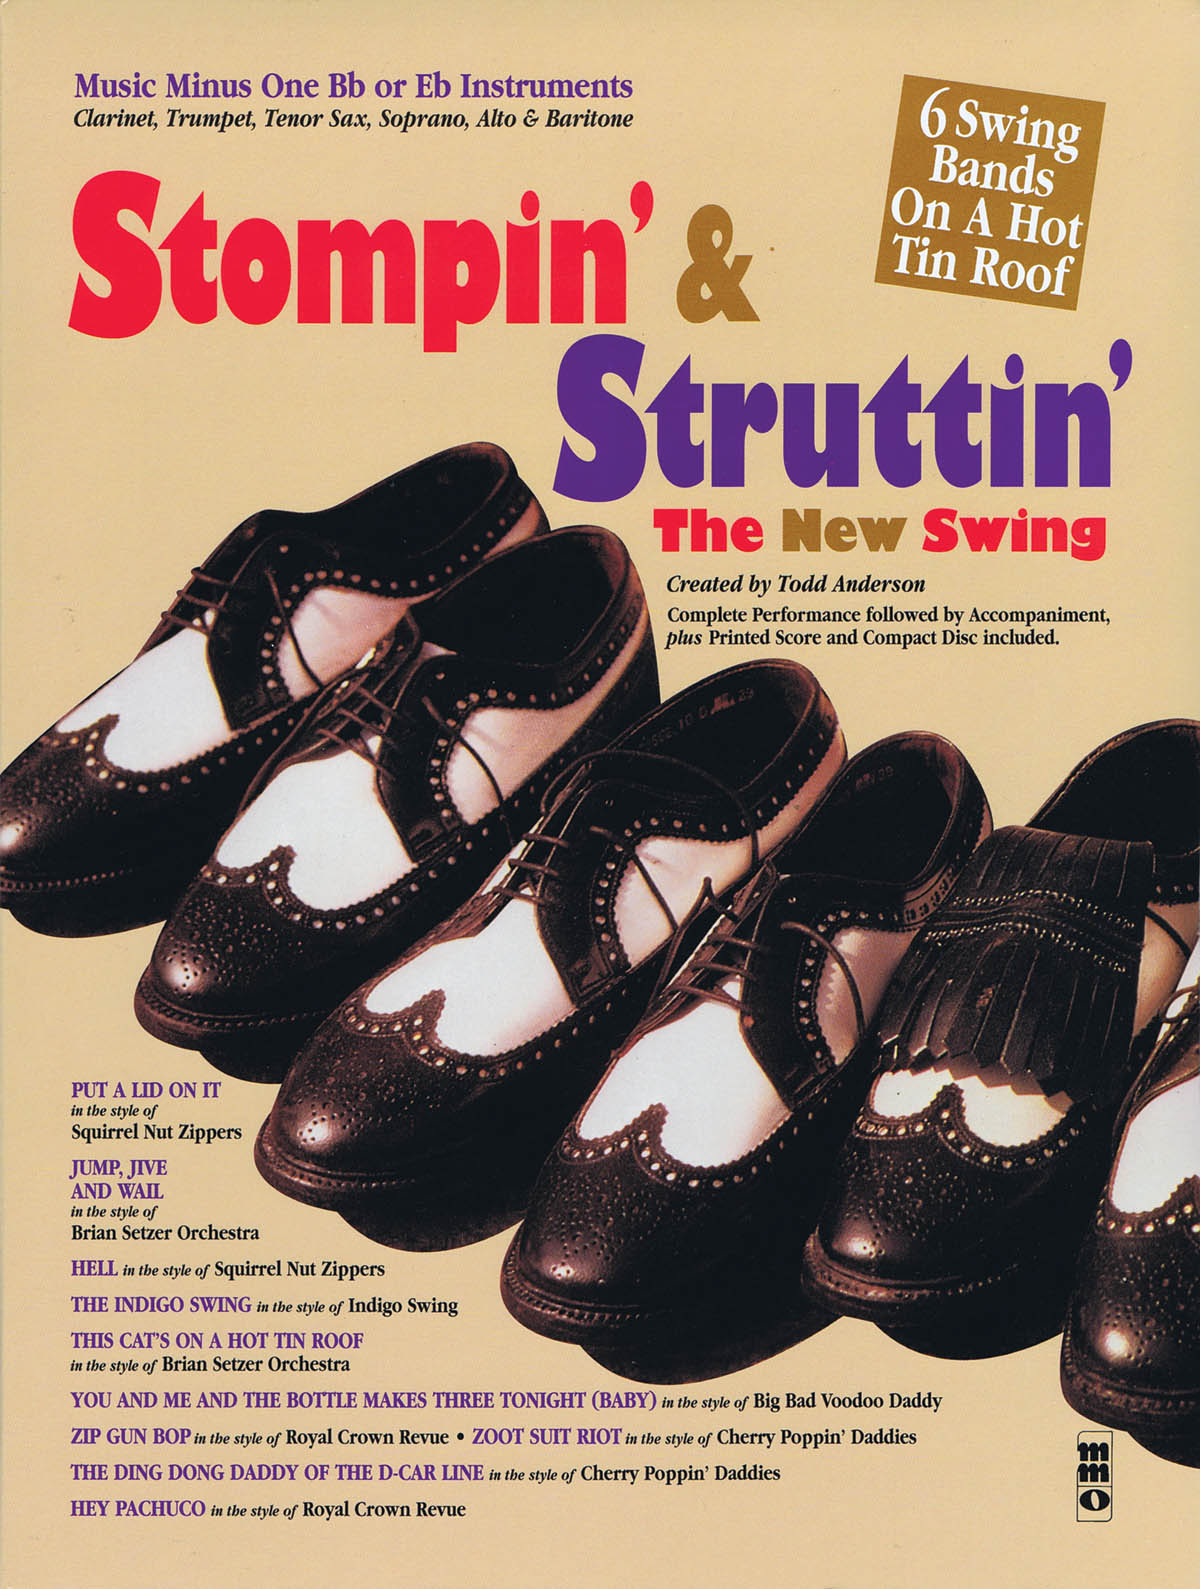 Stompin’ & Struttin’ – The New Swing